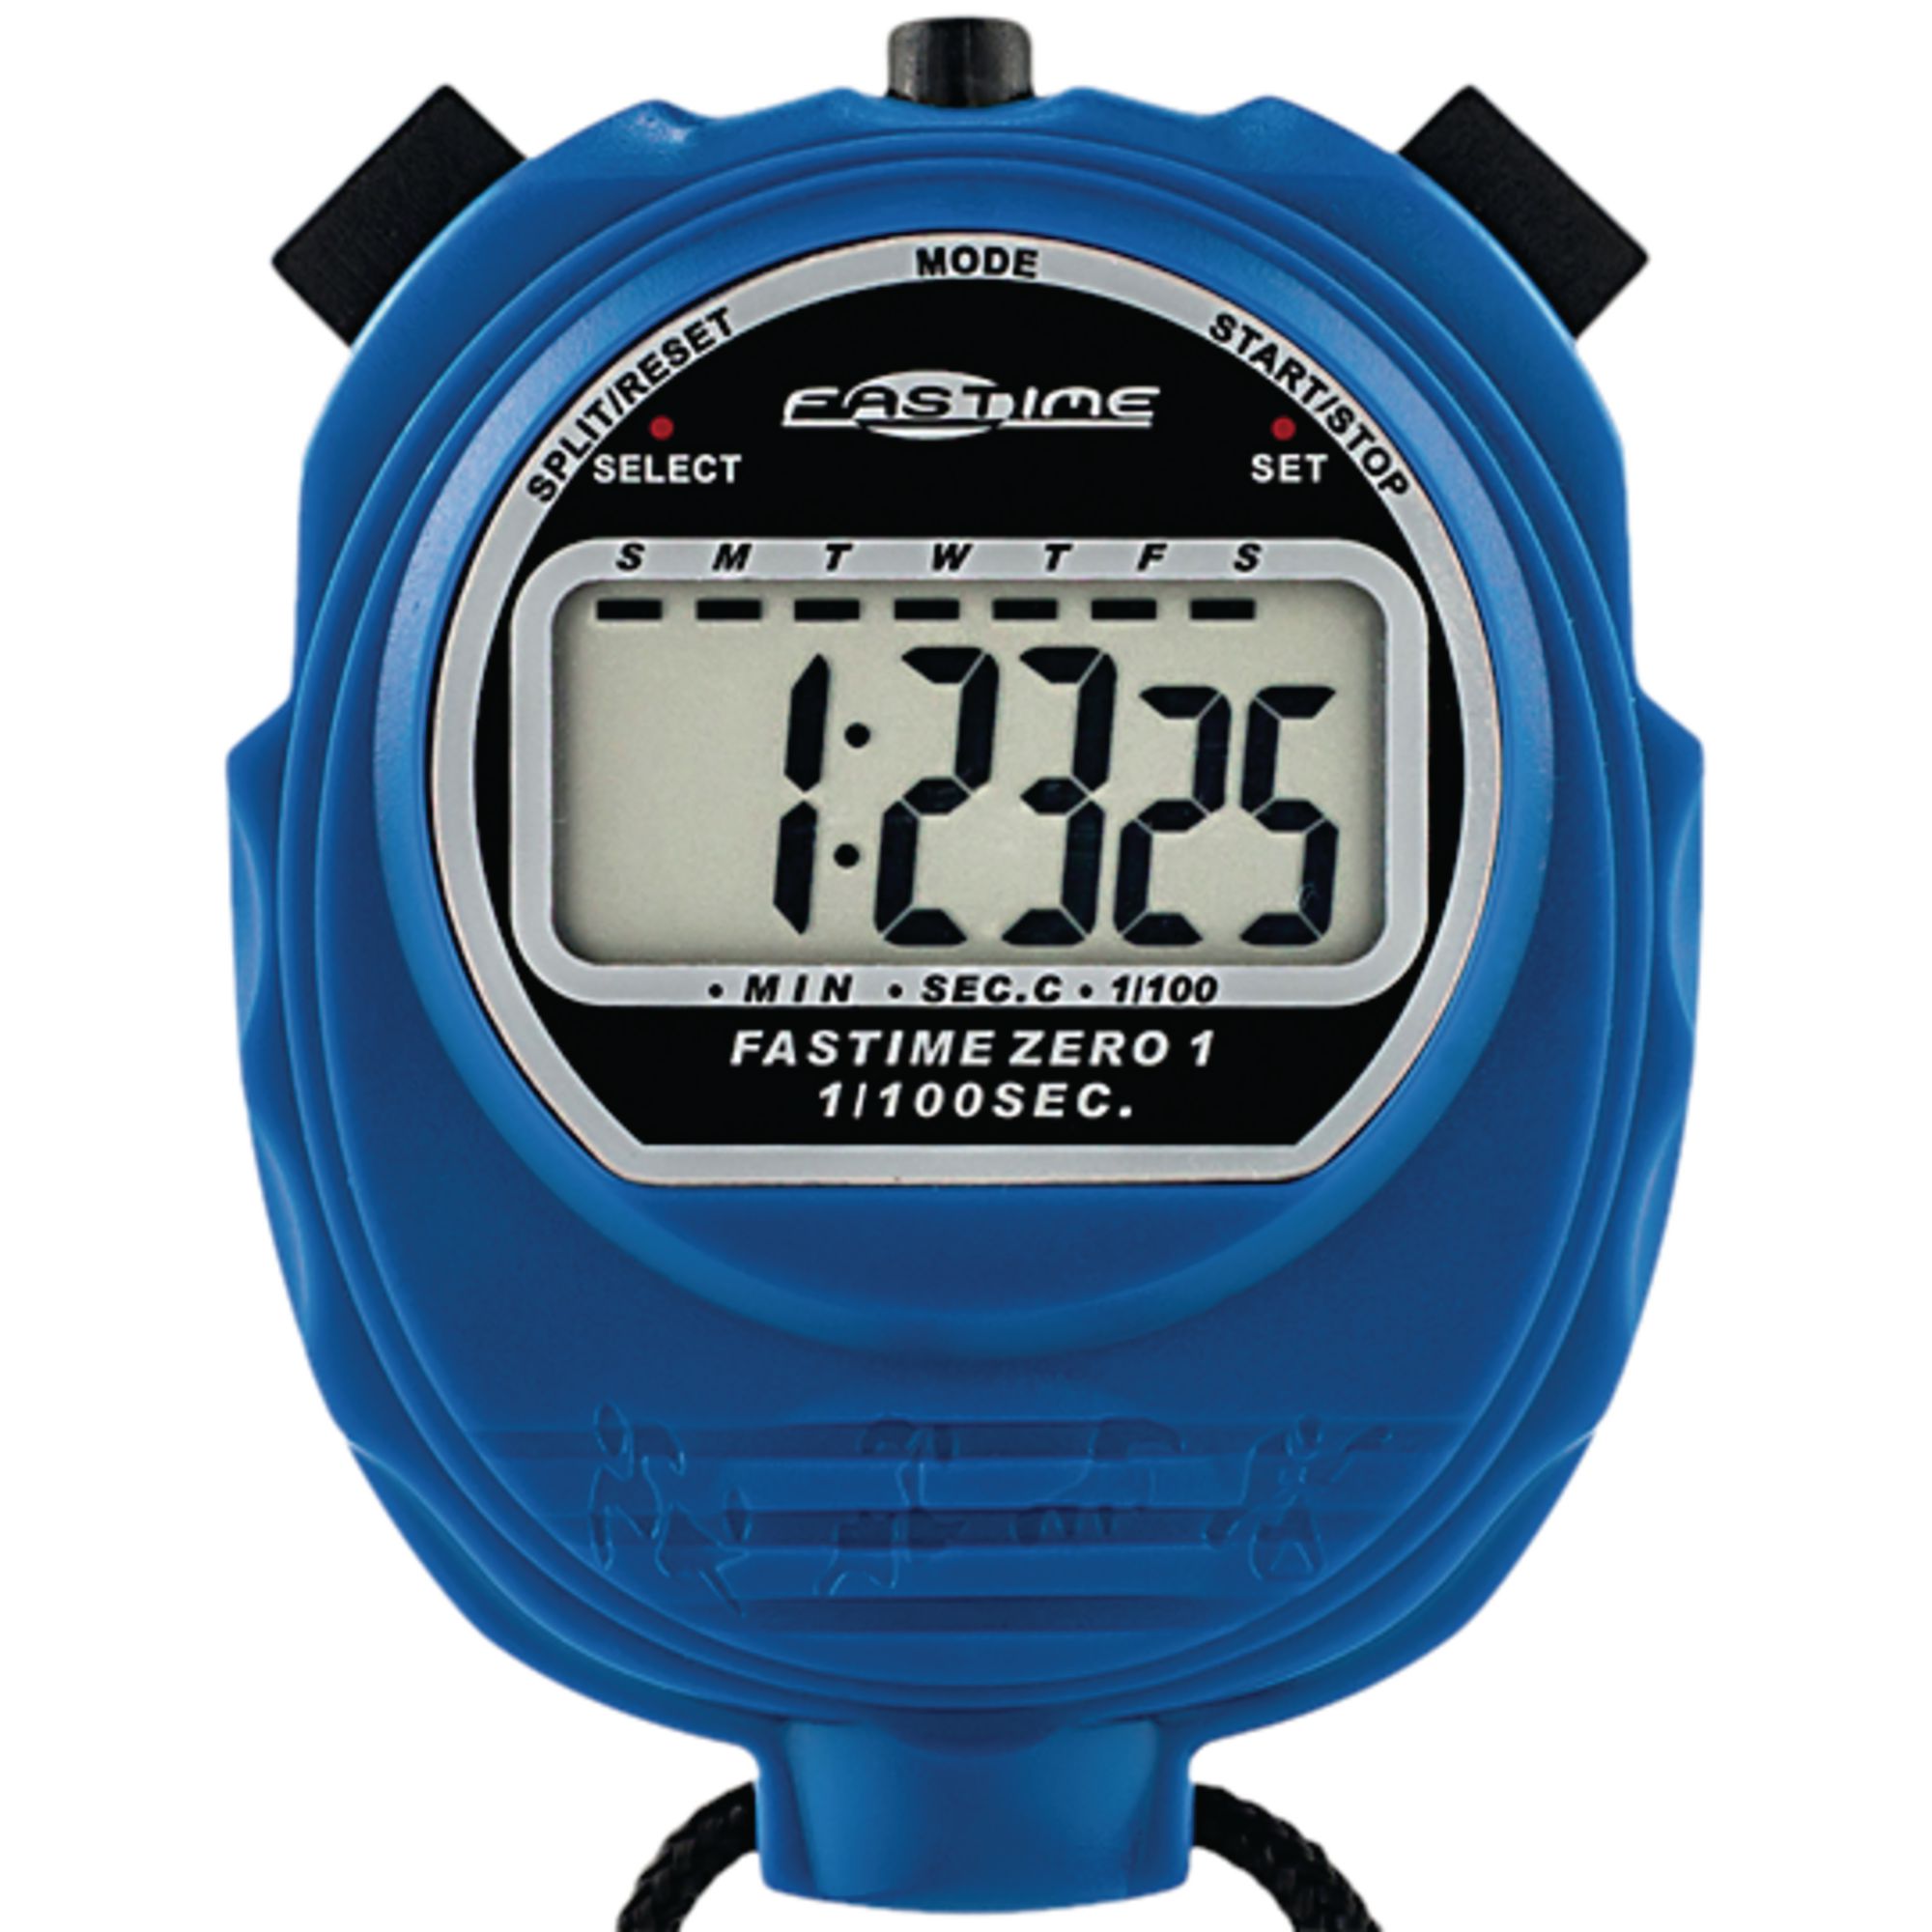 Fastime 01 Pro Digital Handheld Sports Stopwatch Watch Timer Alarm Counter  Green | eBay